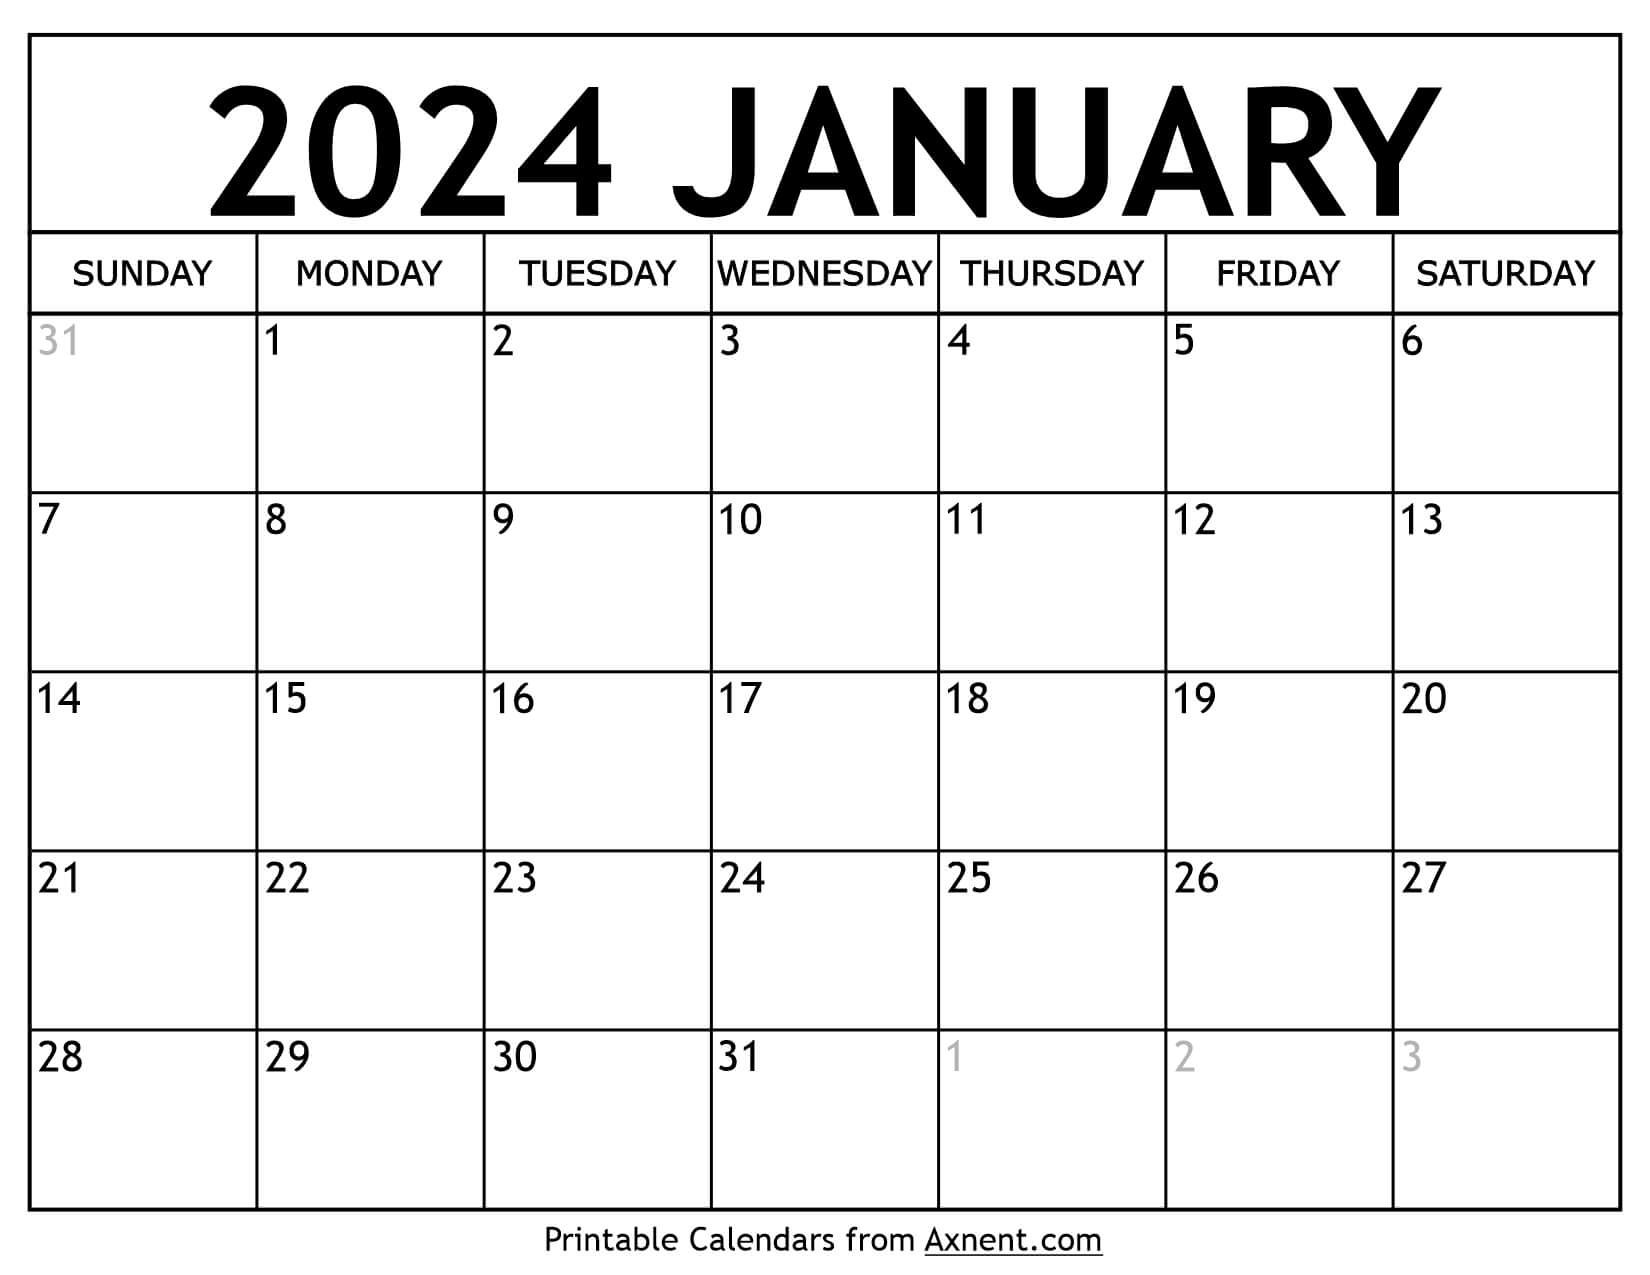 Printable January 2024 Calendar Template - Print Now for Free Calendar Printable January 2024